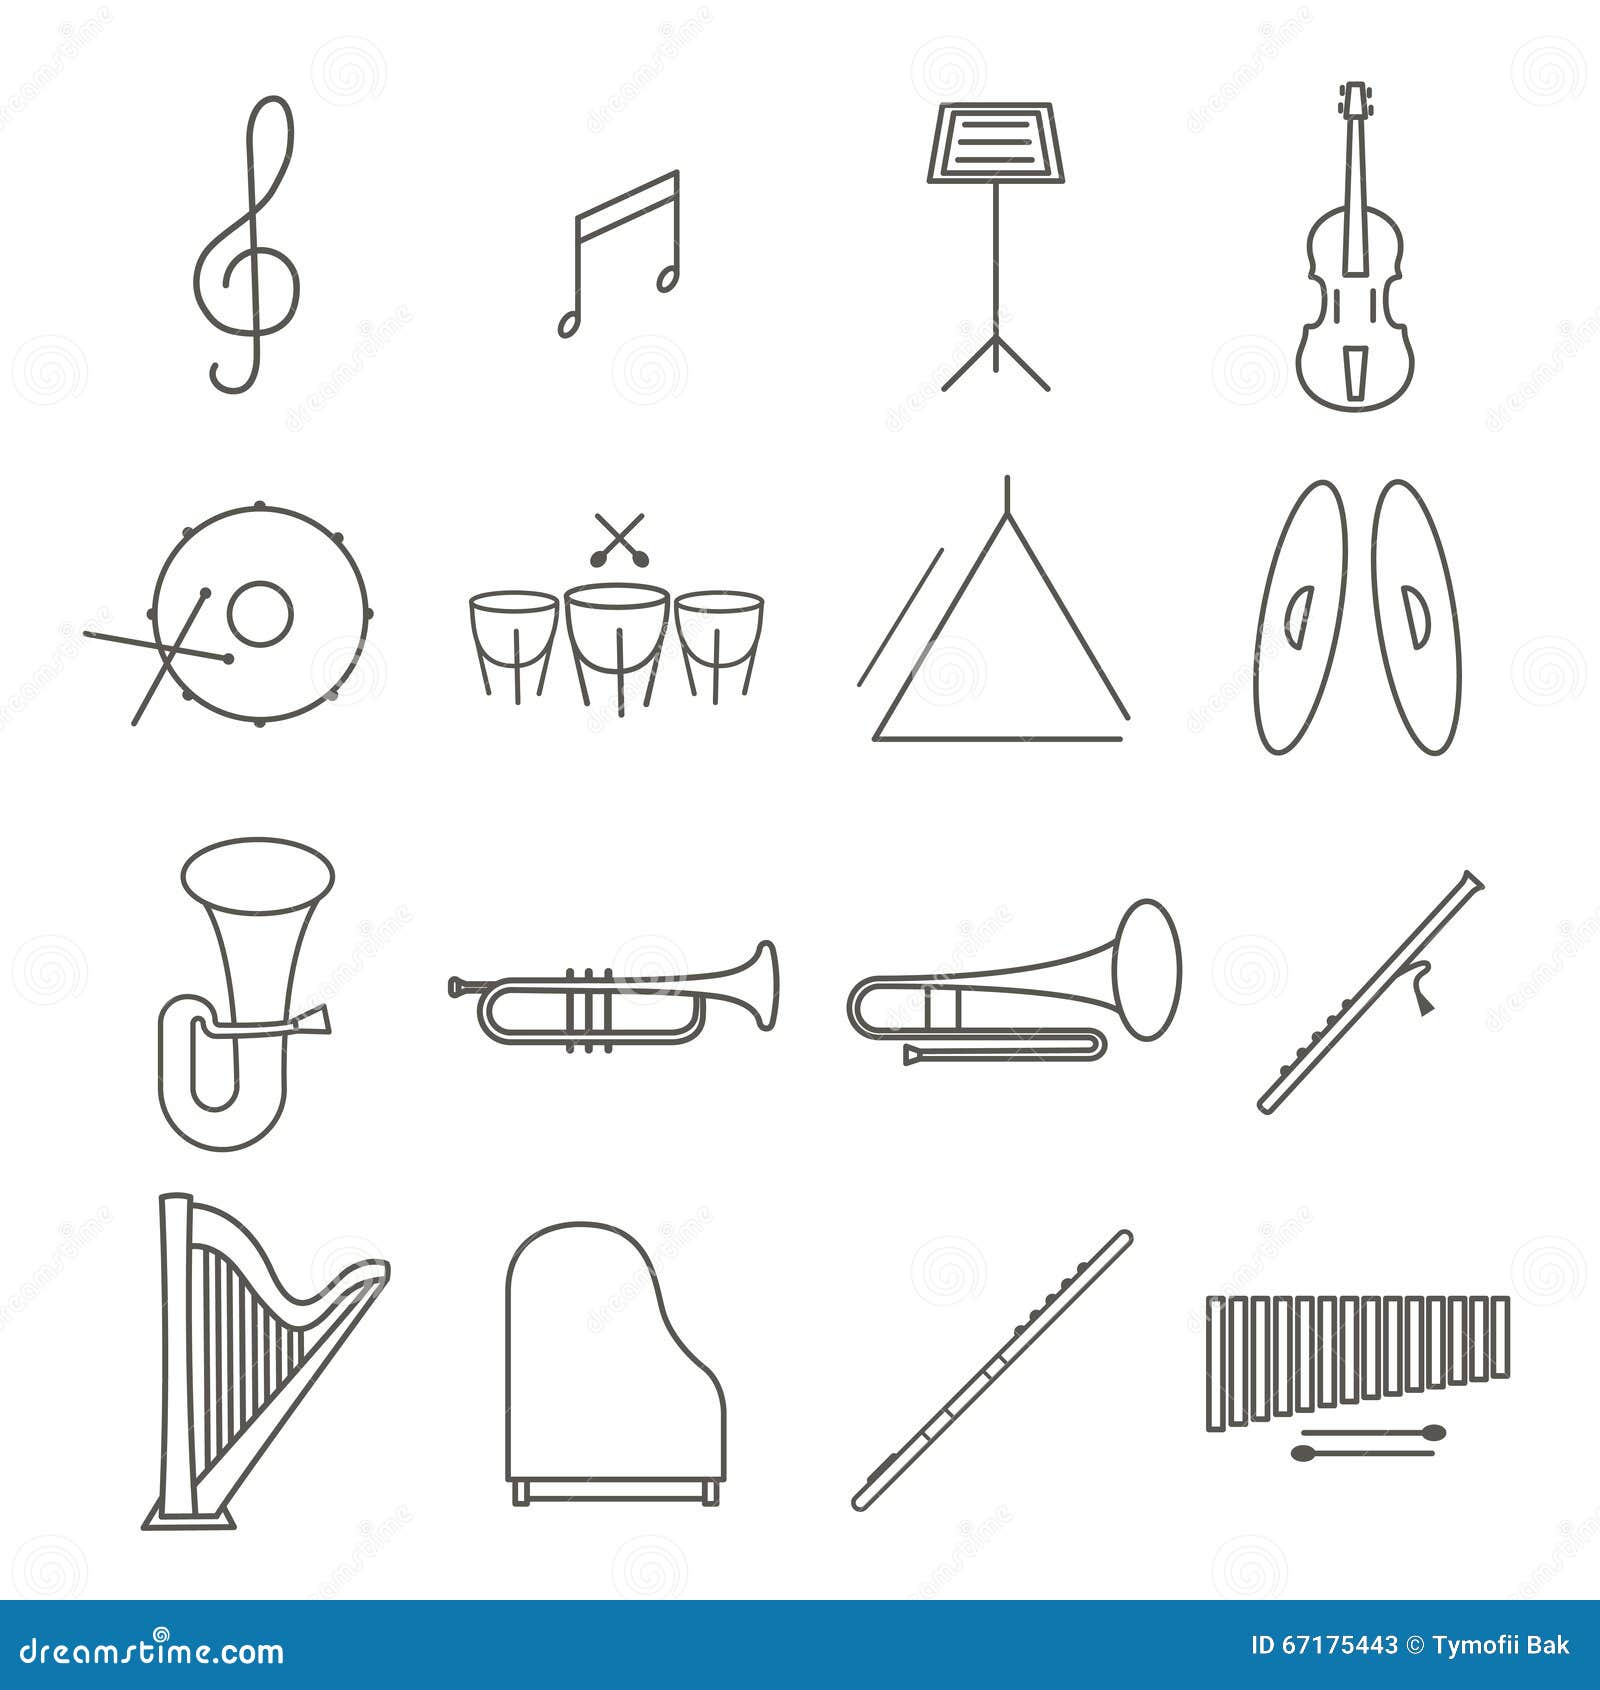 musica instrument thin line icon set